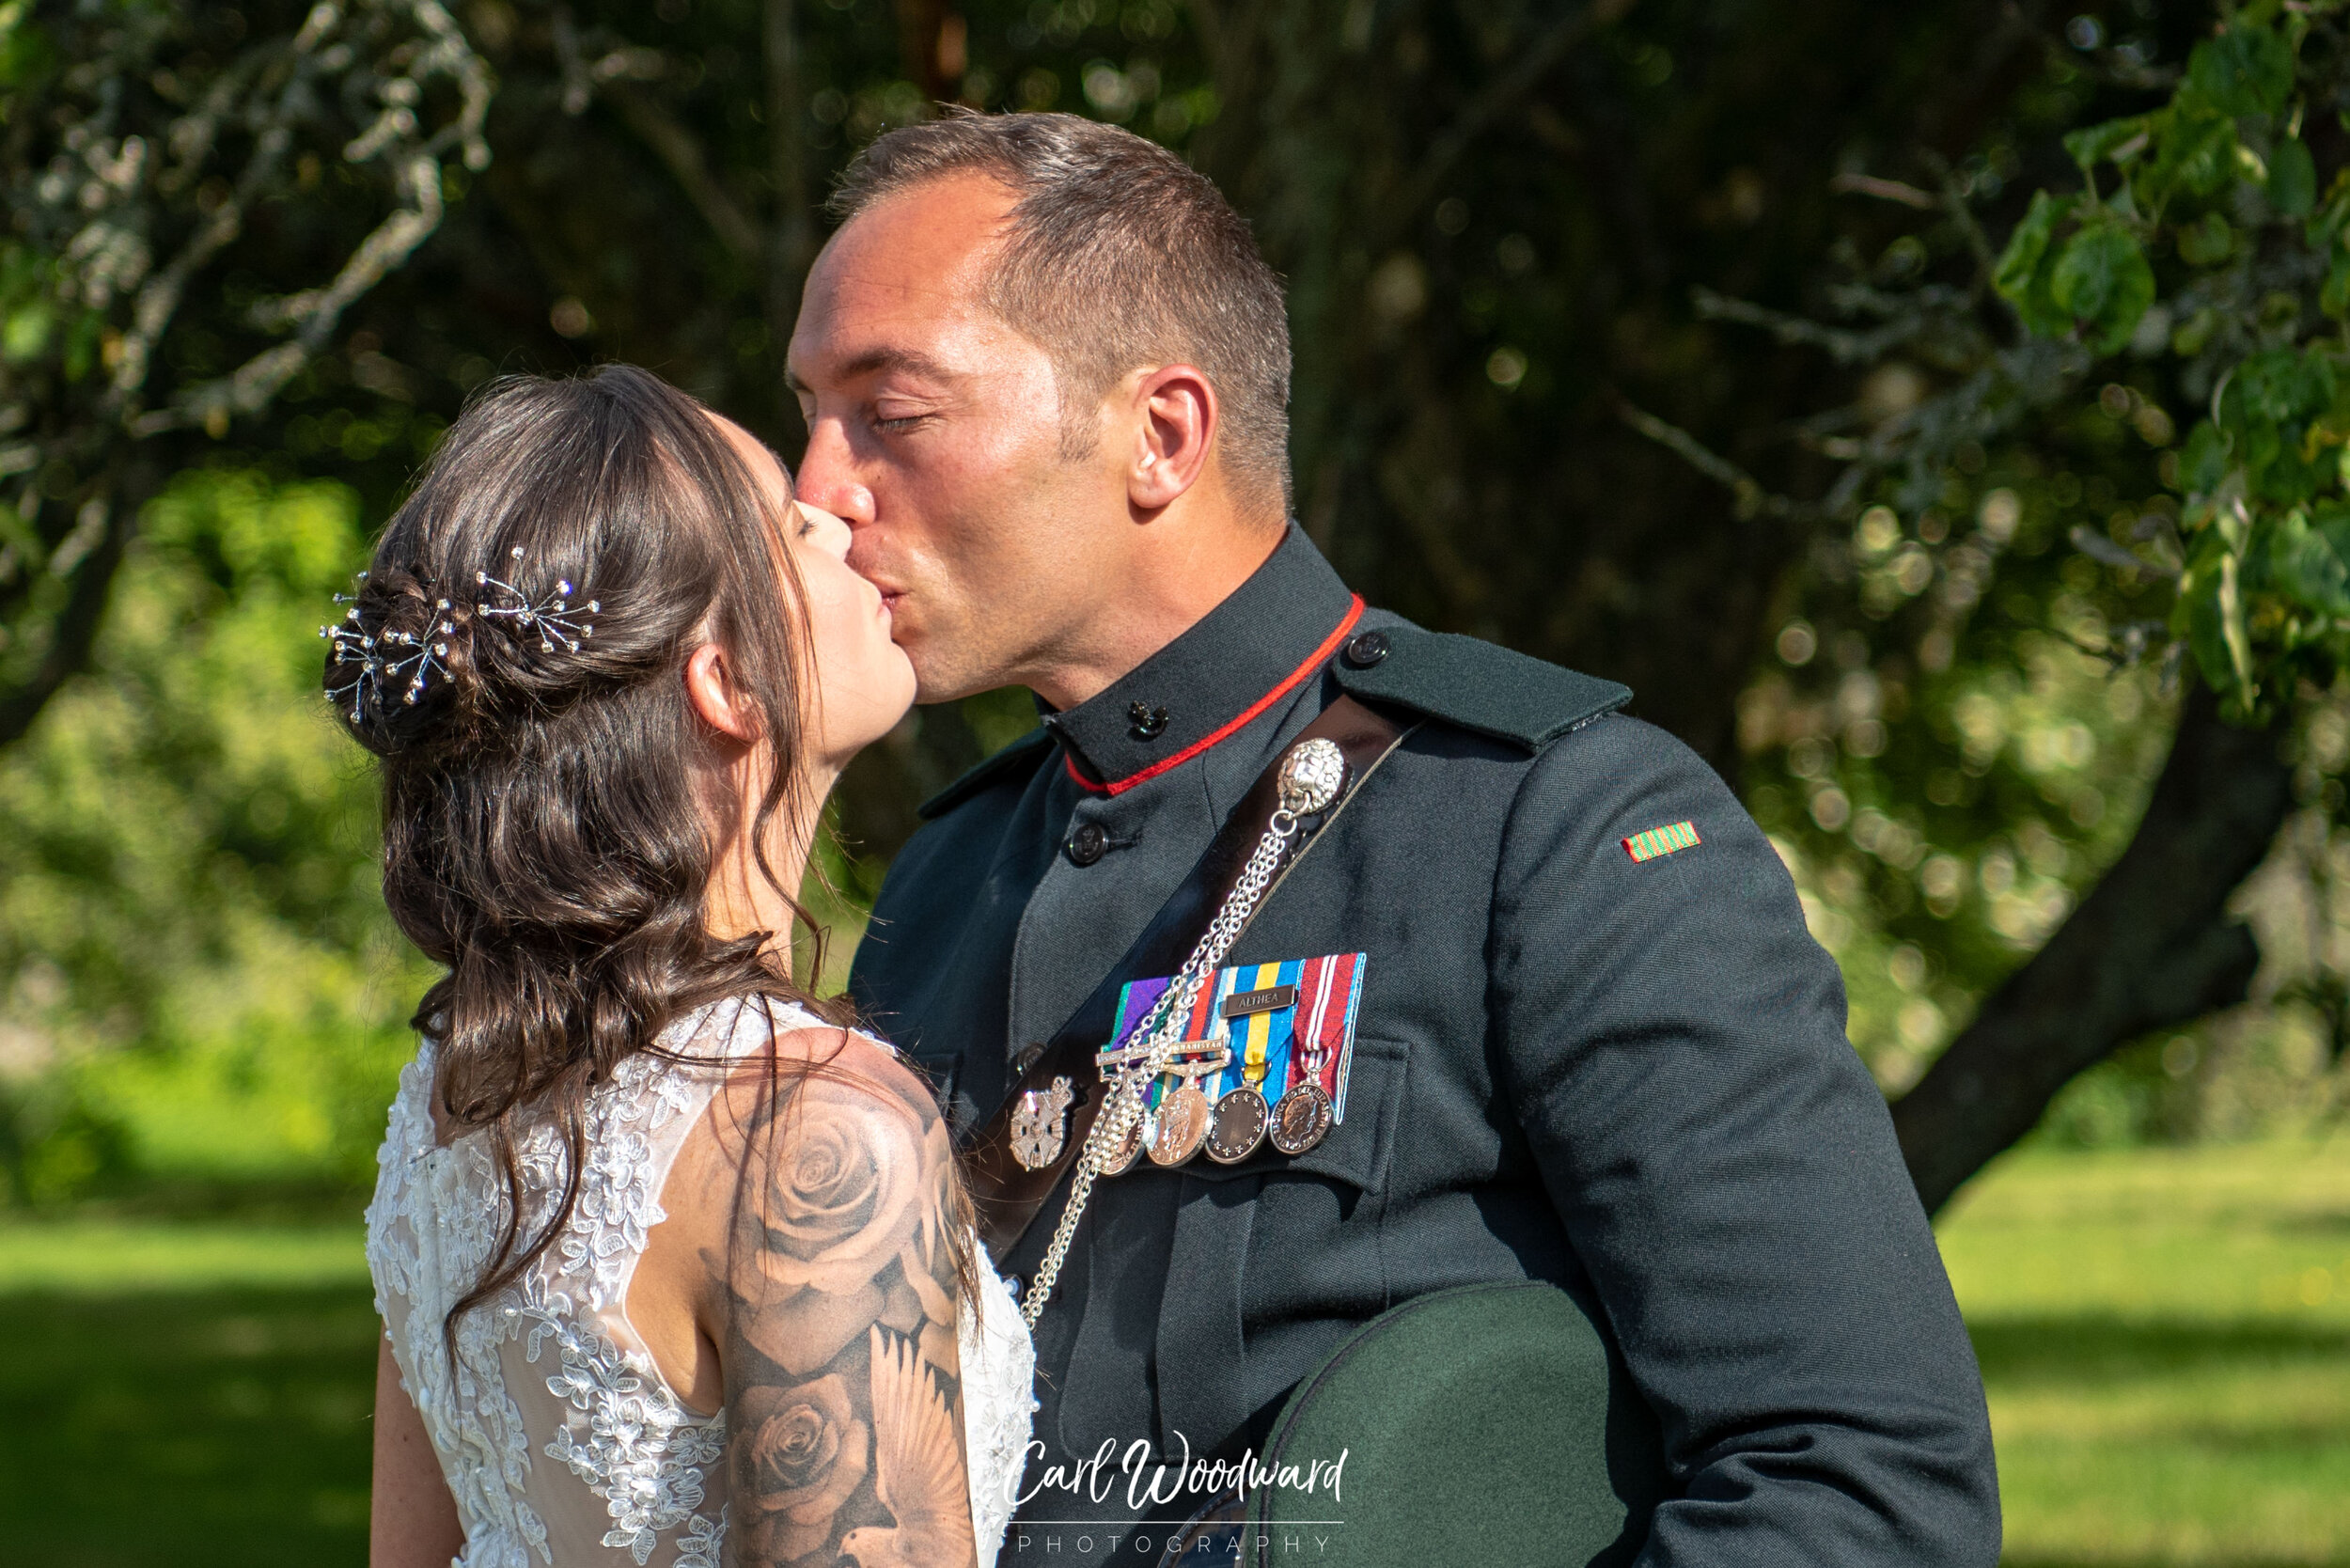 008-Military-Wedding-Photographer-Cardiff-Wedding-Photography.jpg